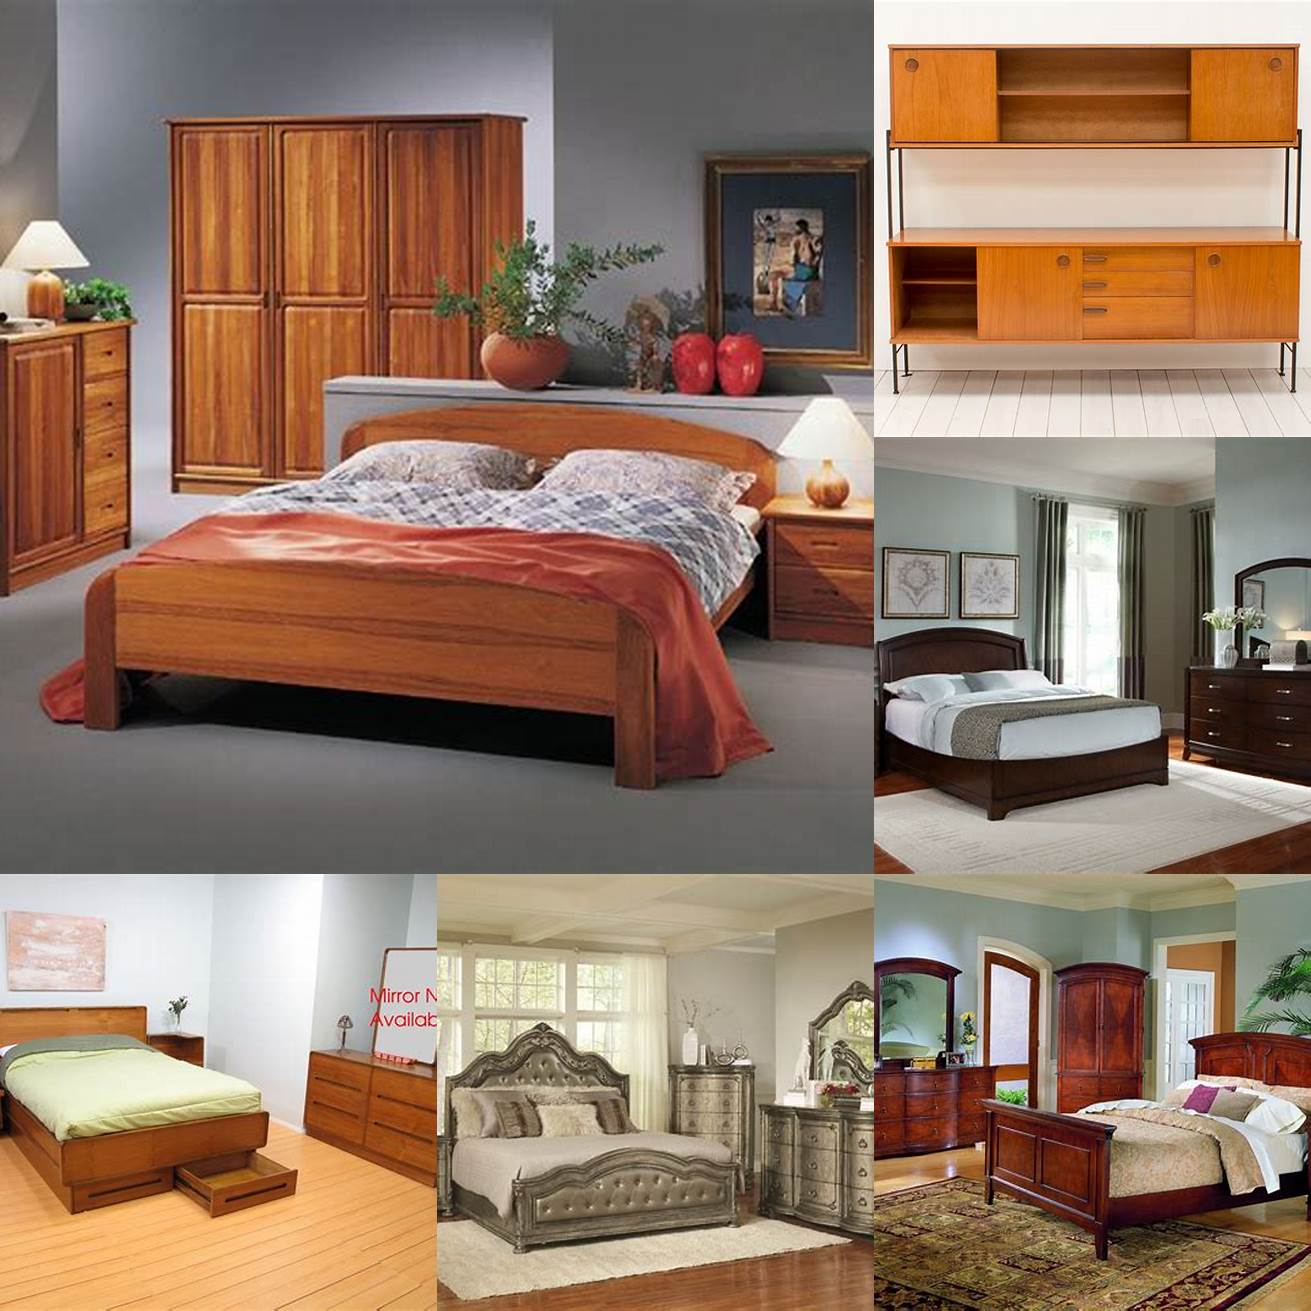 Avalon Teak Furniture in a Bedroom